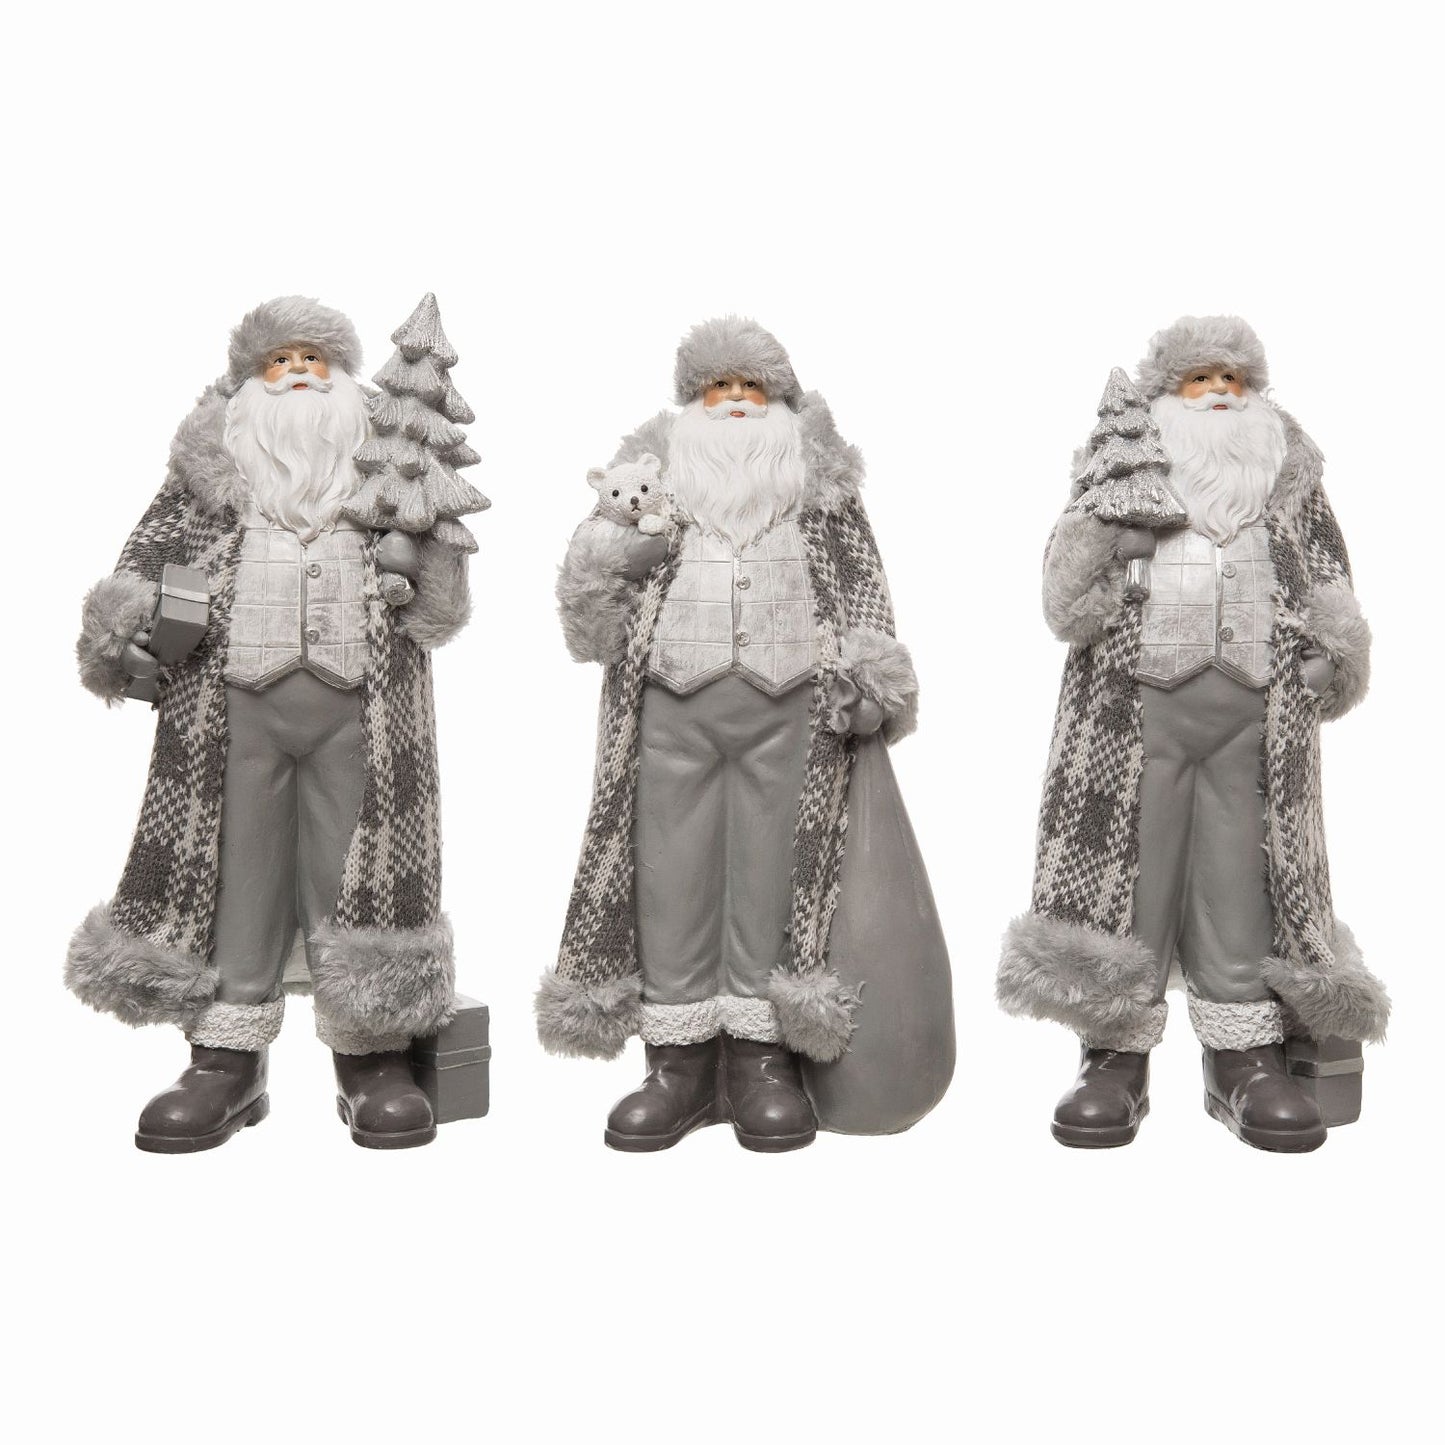 Transpac Resin Plaid Coat Santa, Set Of 3, Assortment